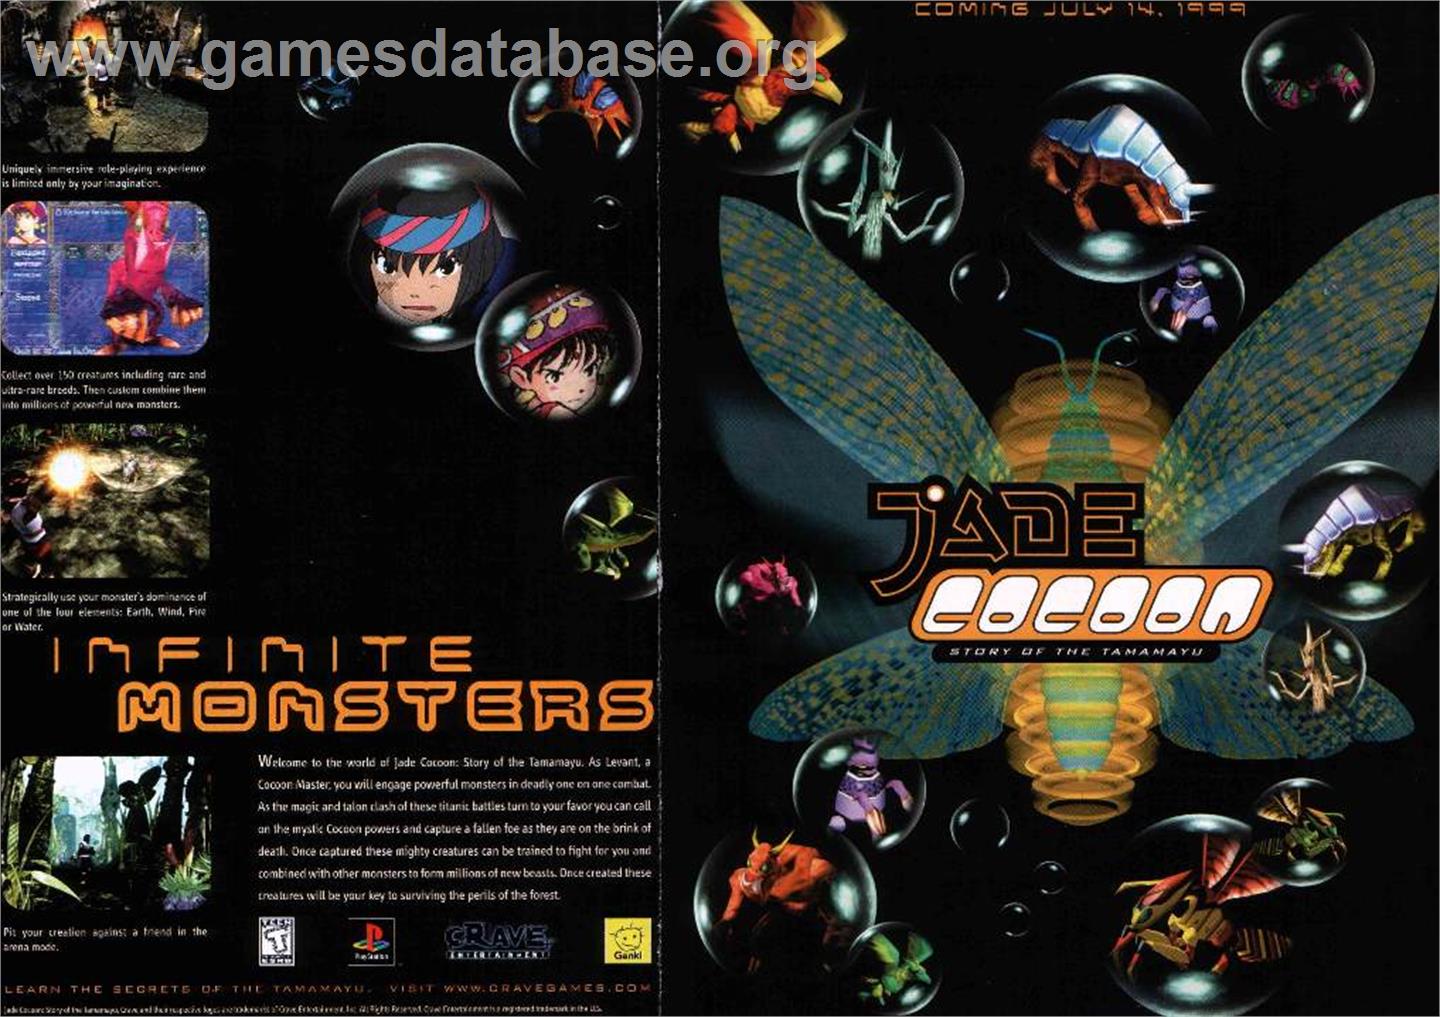 Jade Cocoon: Story of the Tamamayu - Sony Playstation - Artwork - Advert